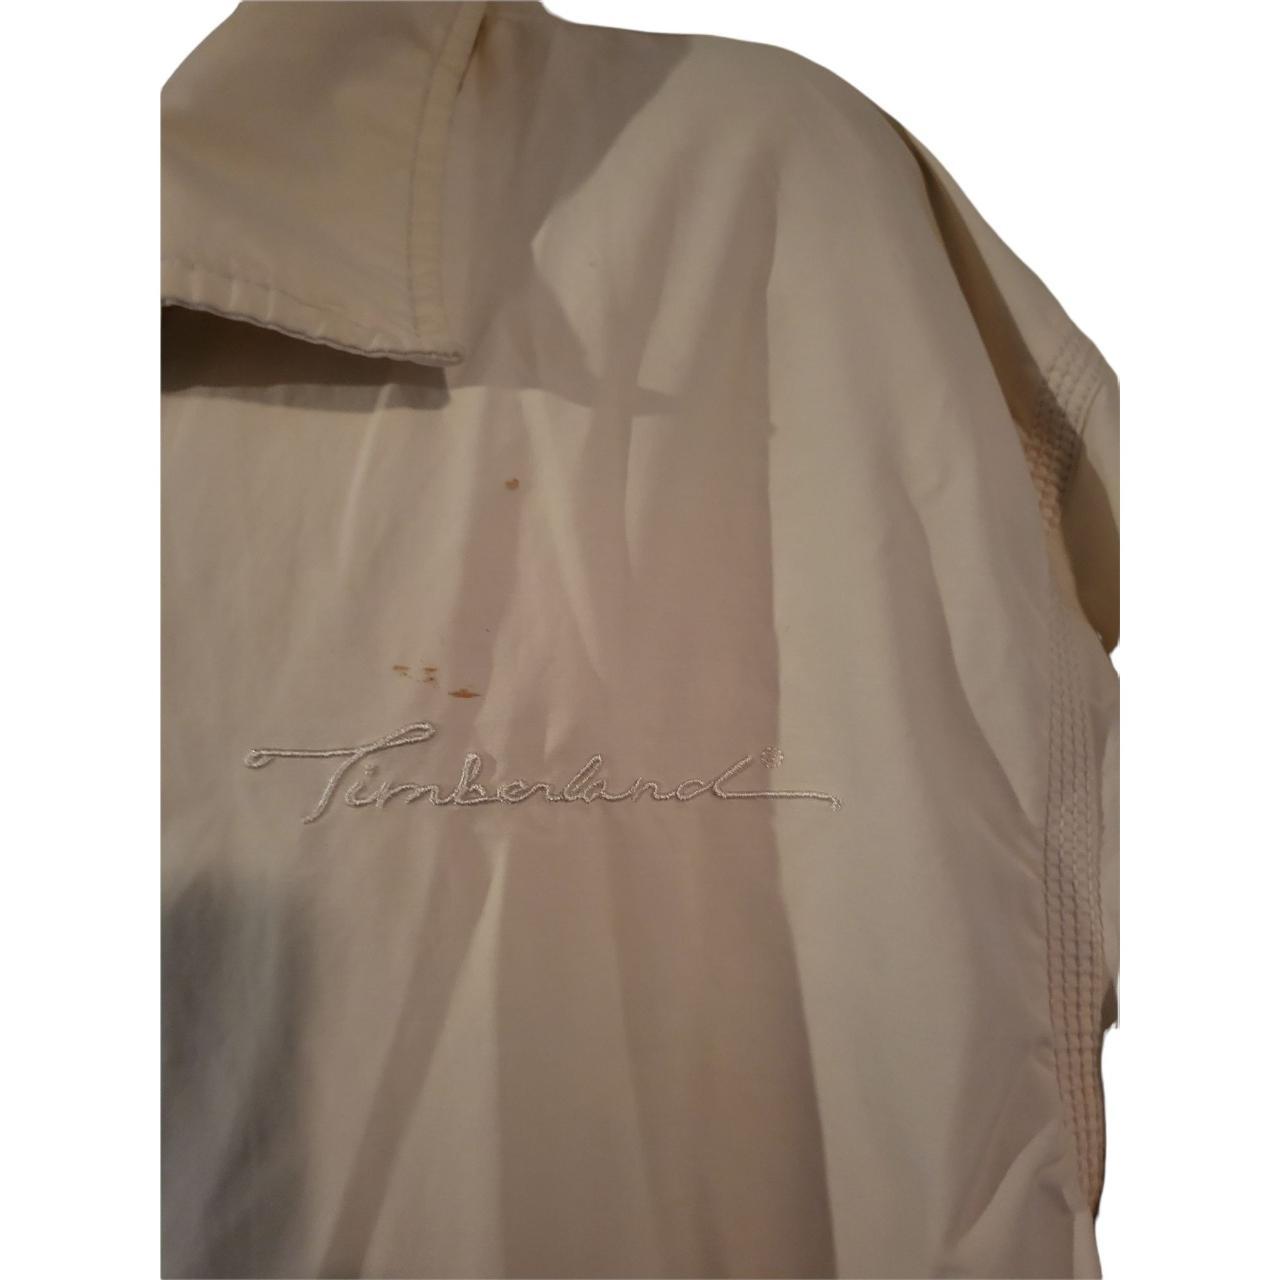 Timberland Coat Winter Men Sz XL Cream Outdoors has... - Depop